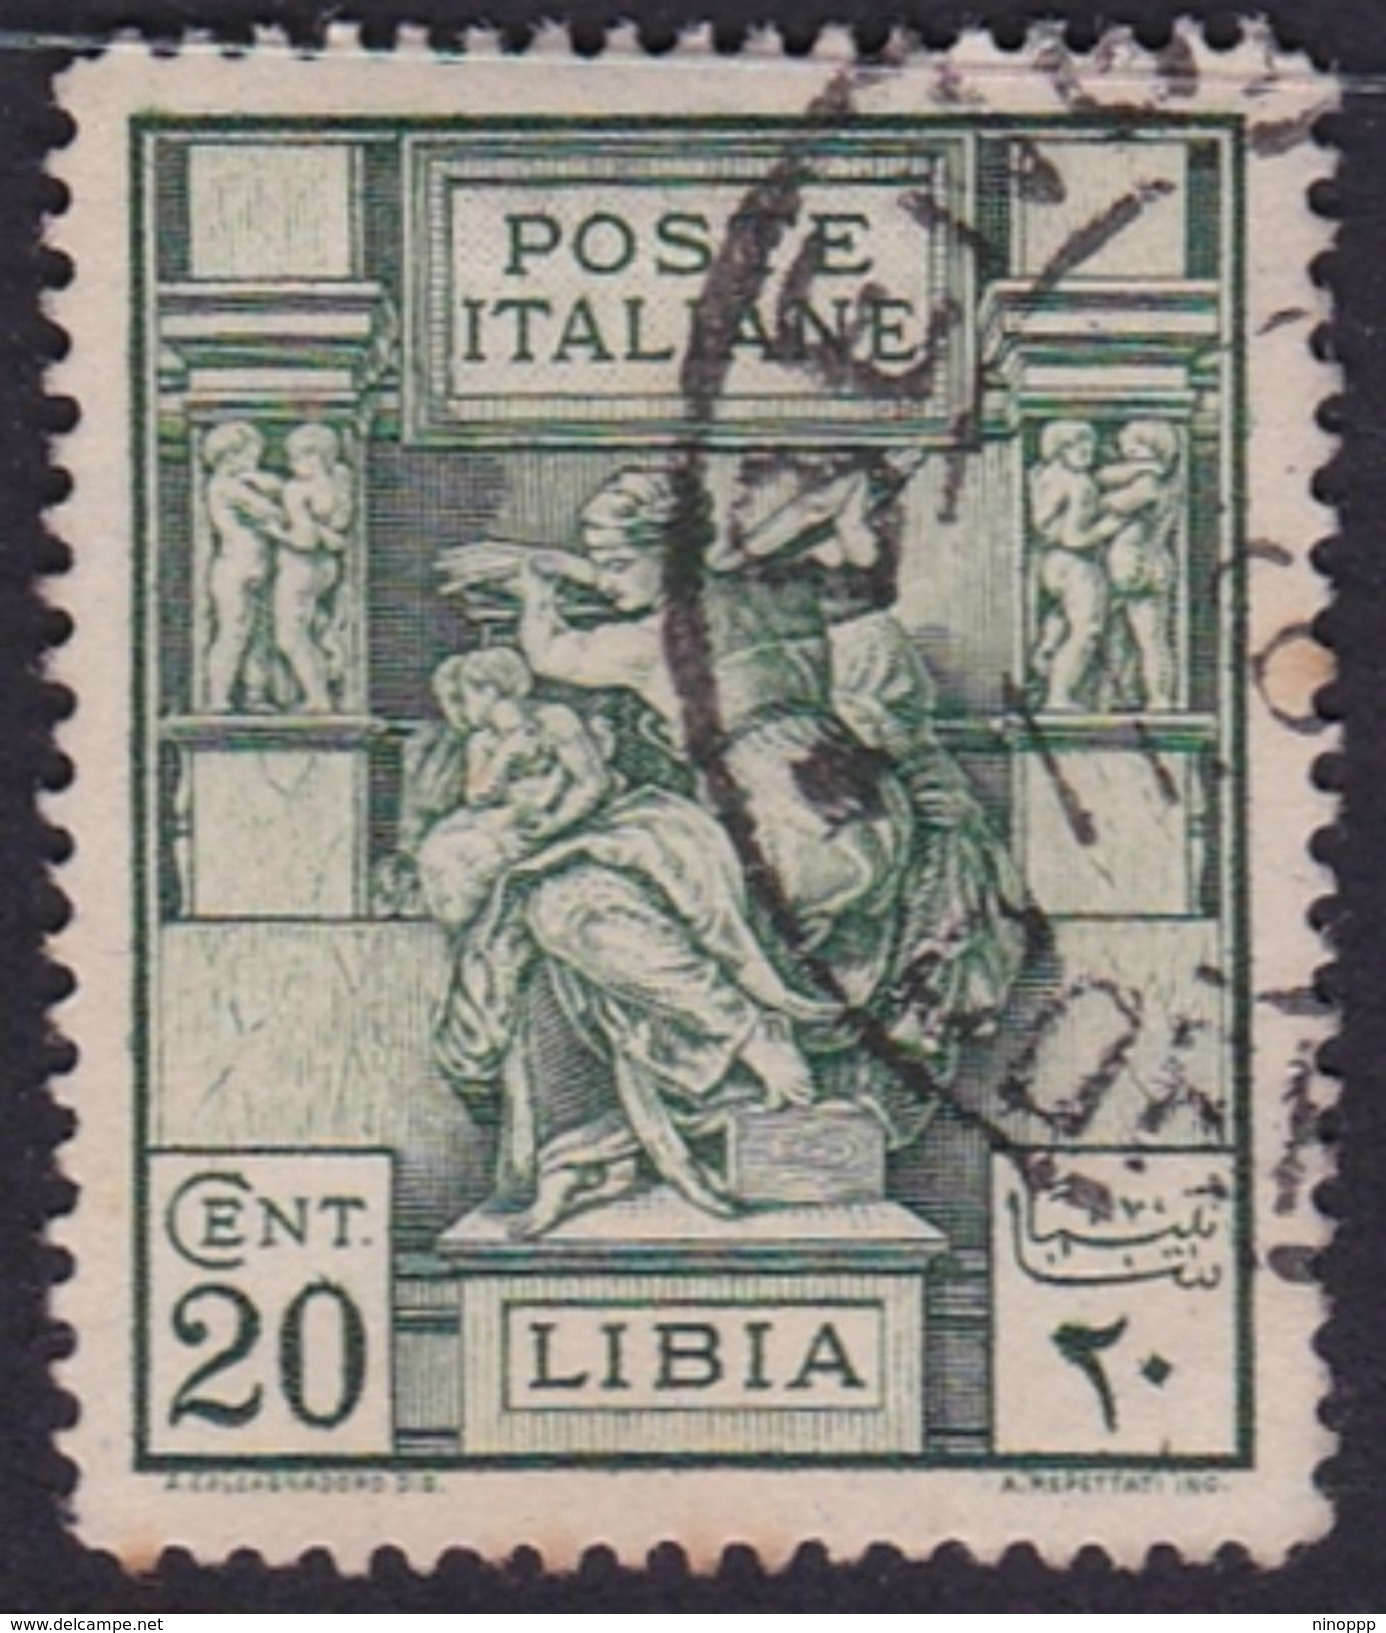 Italy-Colonies And Territories-Libya S 40 1924 ,Libyan Sibyl,20c Green Used - Libya